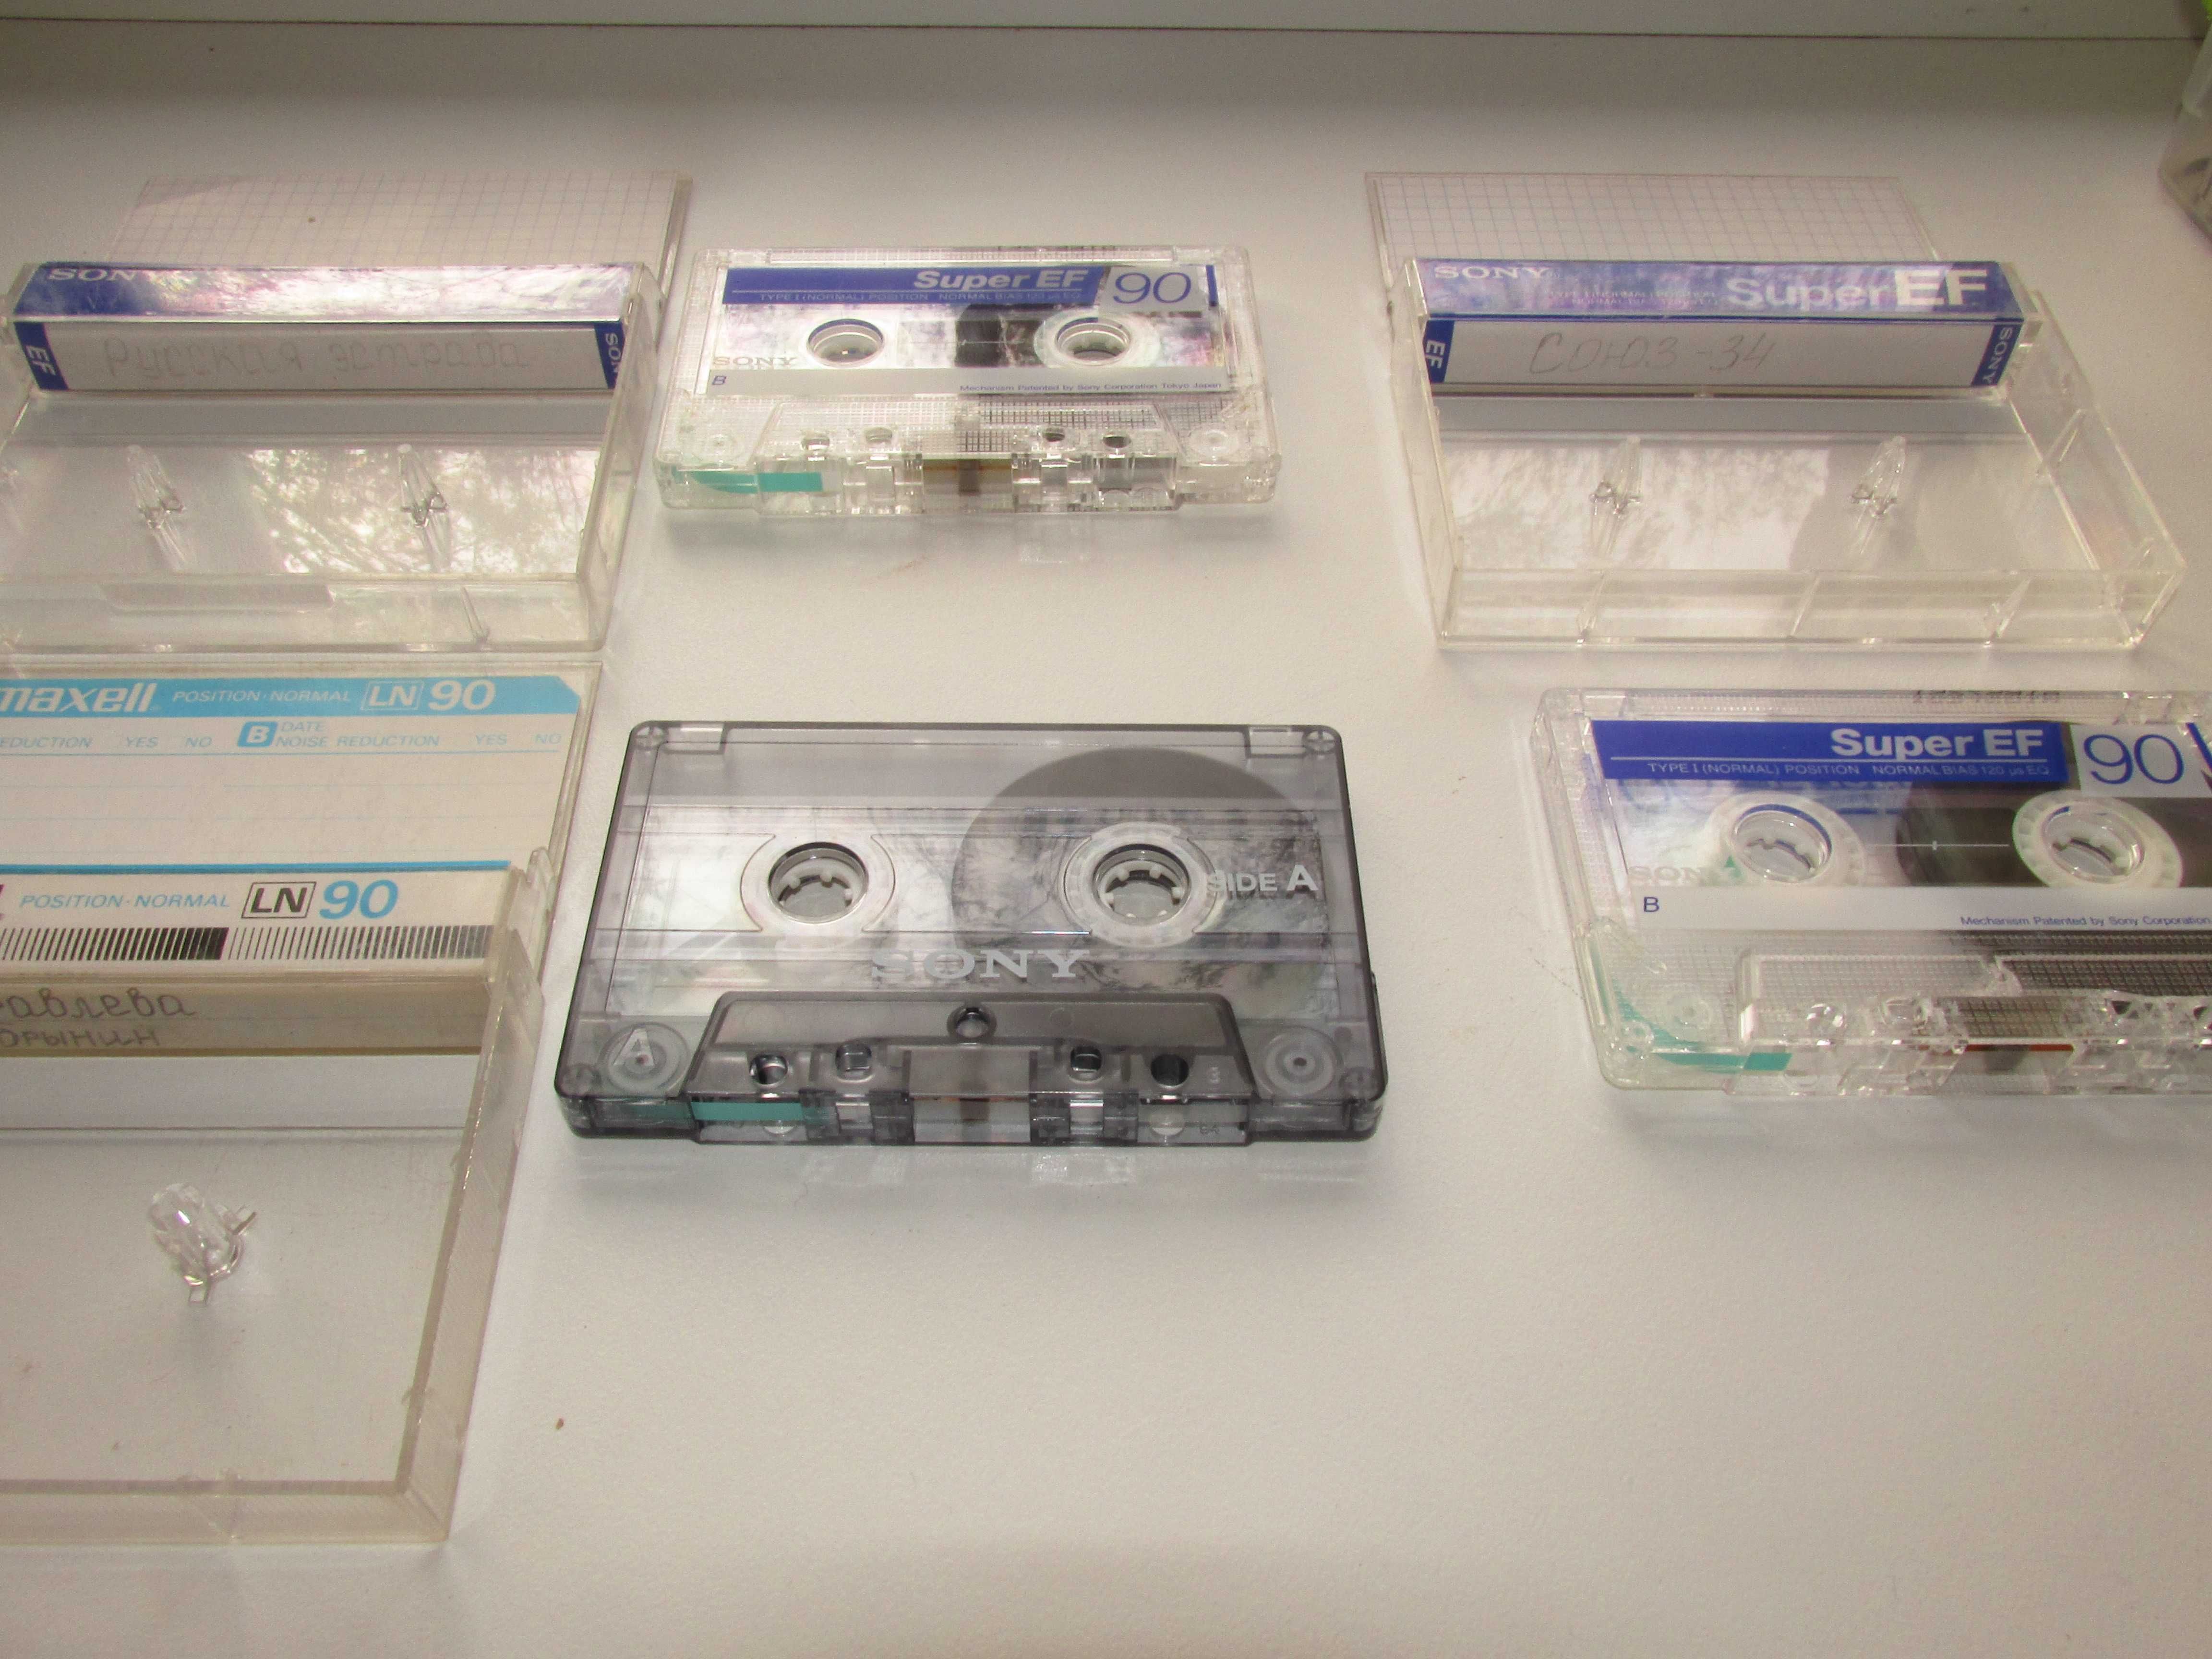 SONY аудио кассеты, аудиокассеты, кассеты магнитофонные